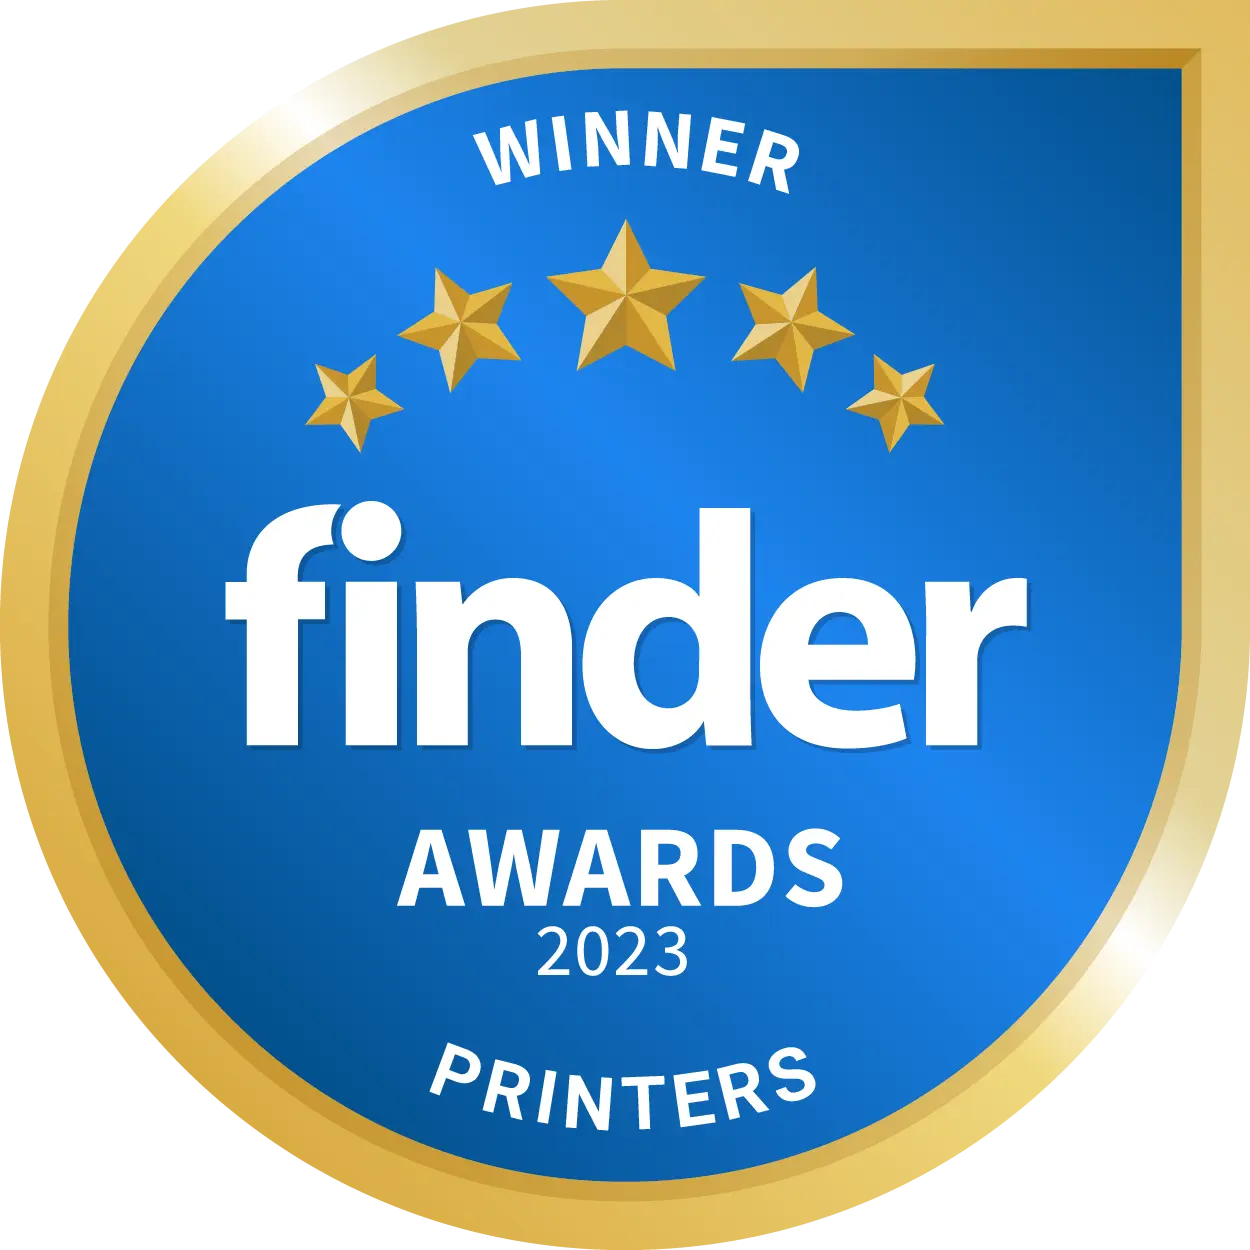 Best printer brand